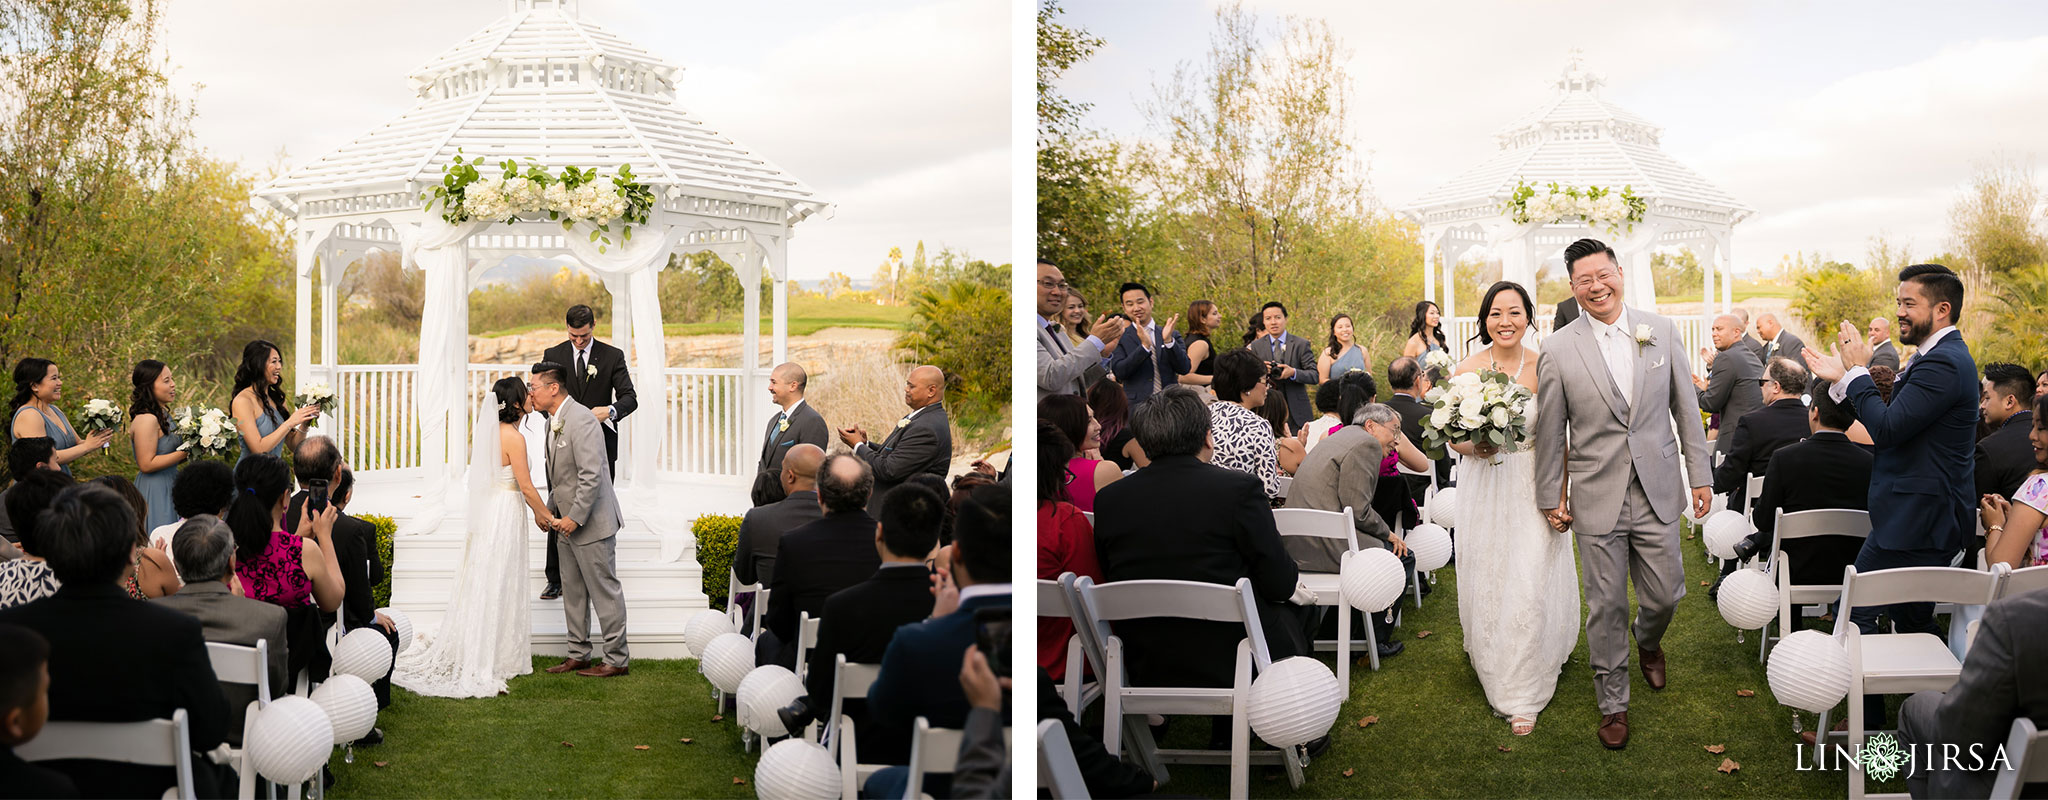 19 westridge golf club la habra wedding ceremony photography